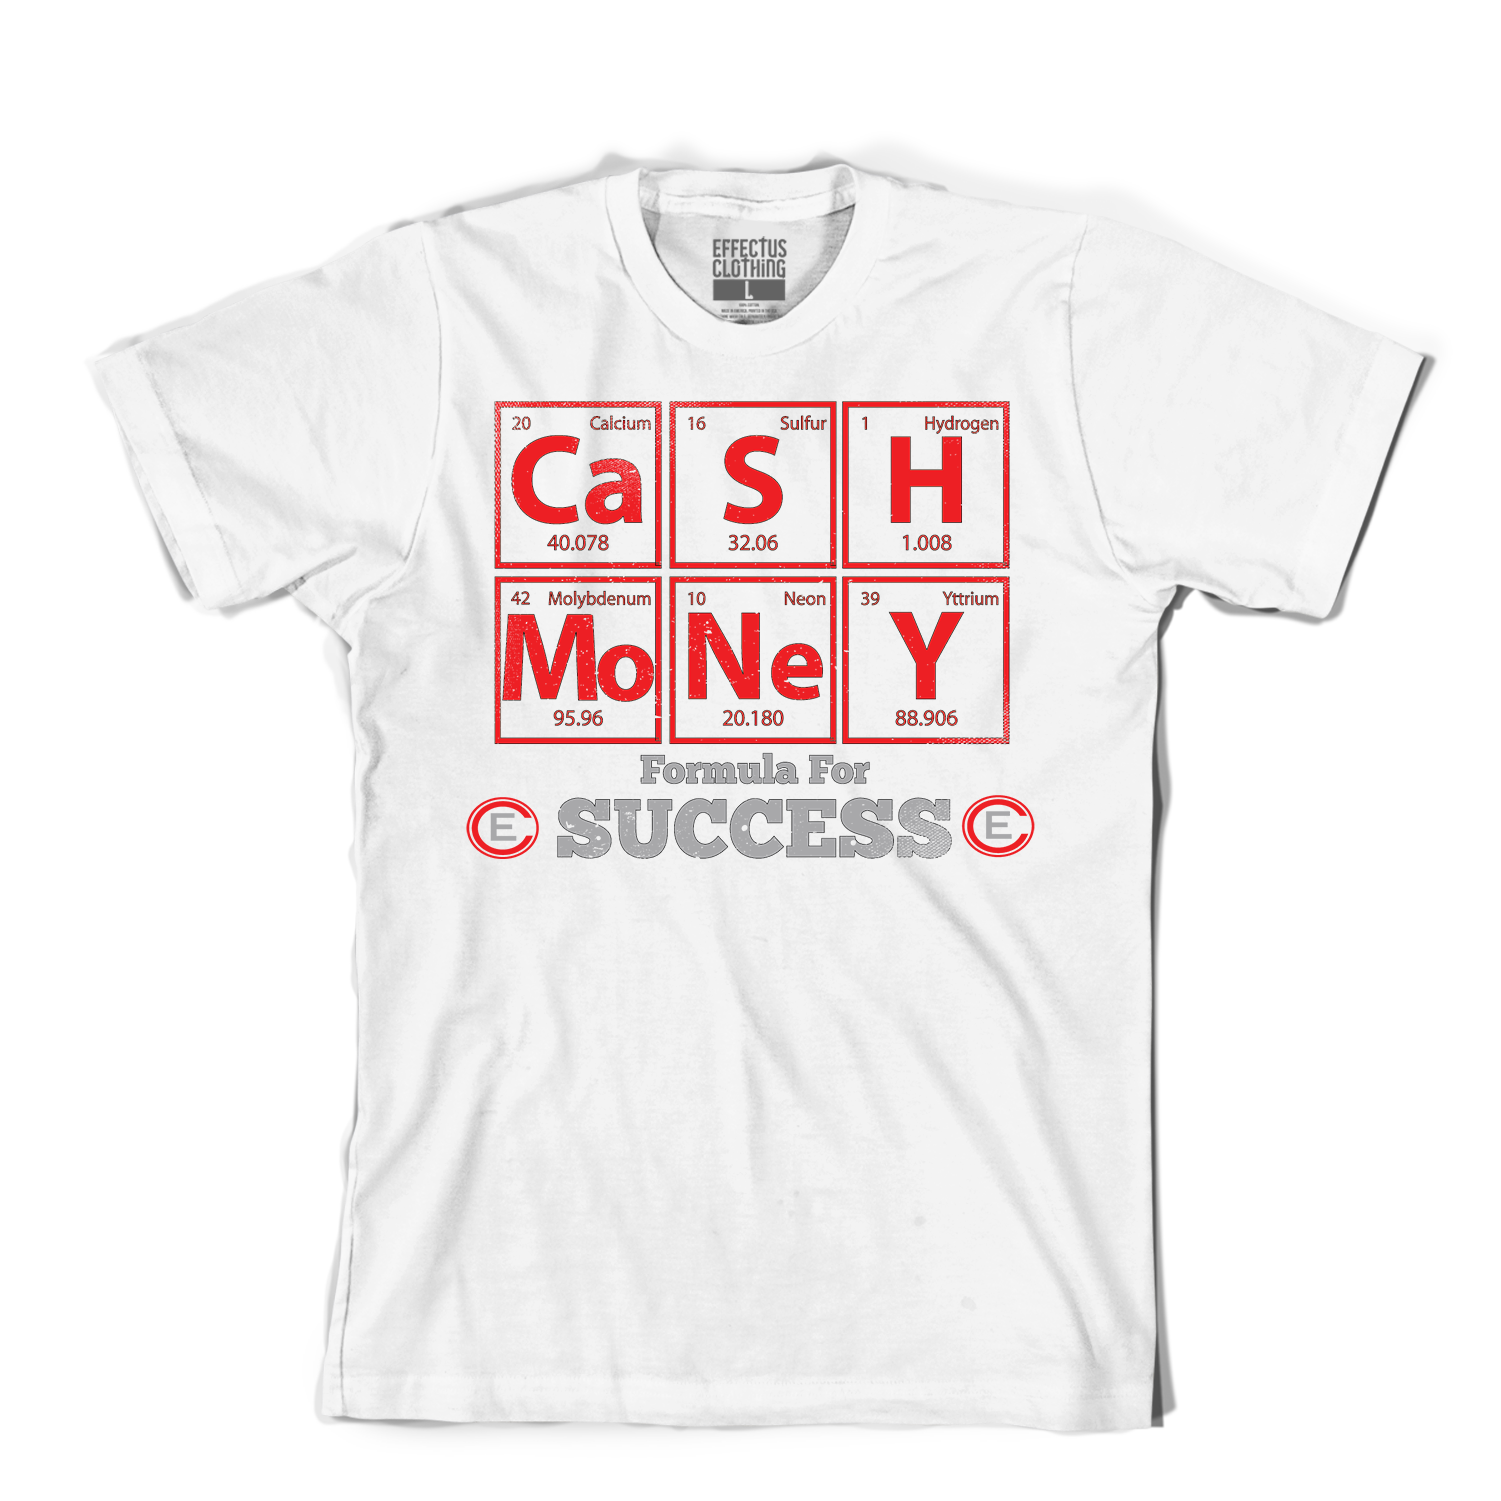 Cash Money Reimagined